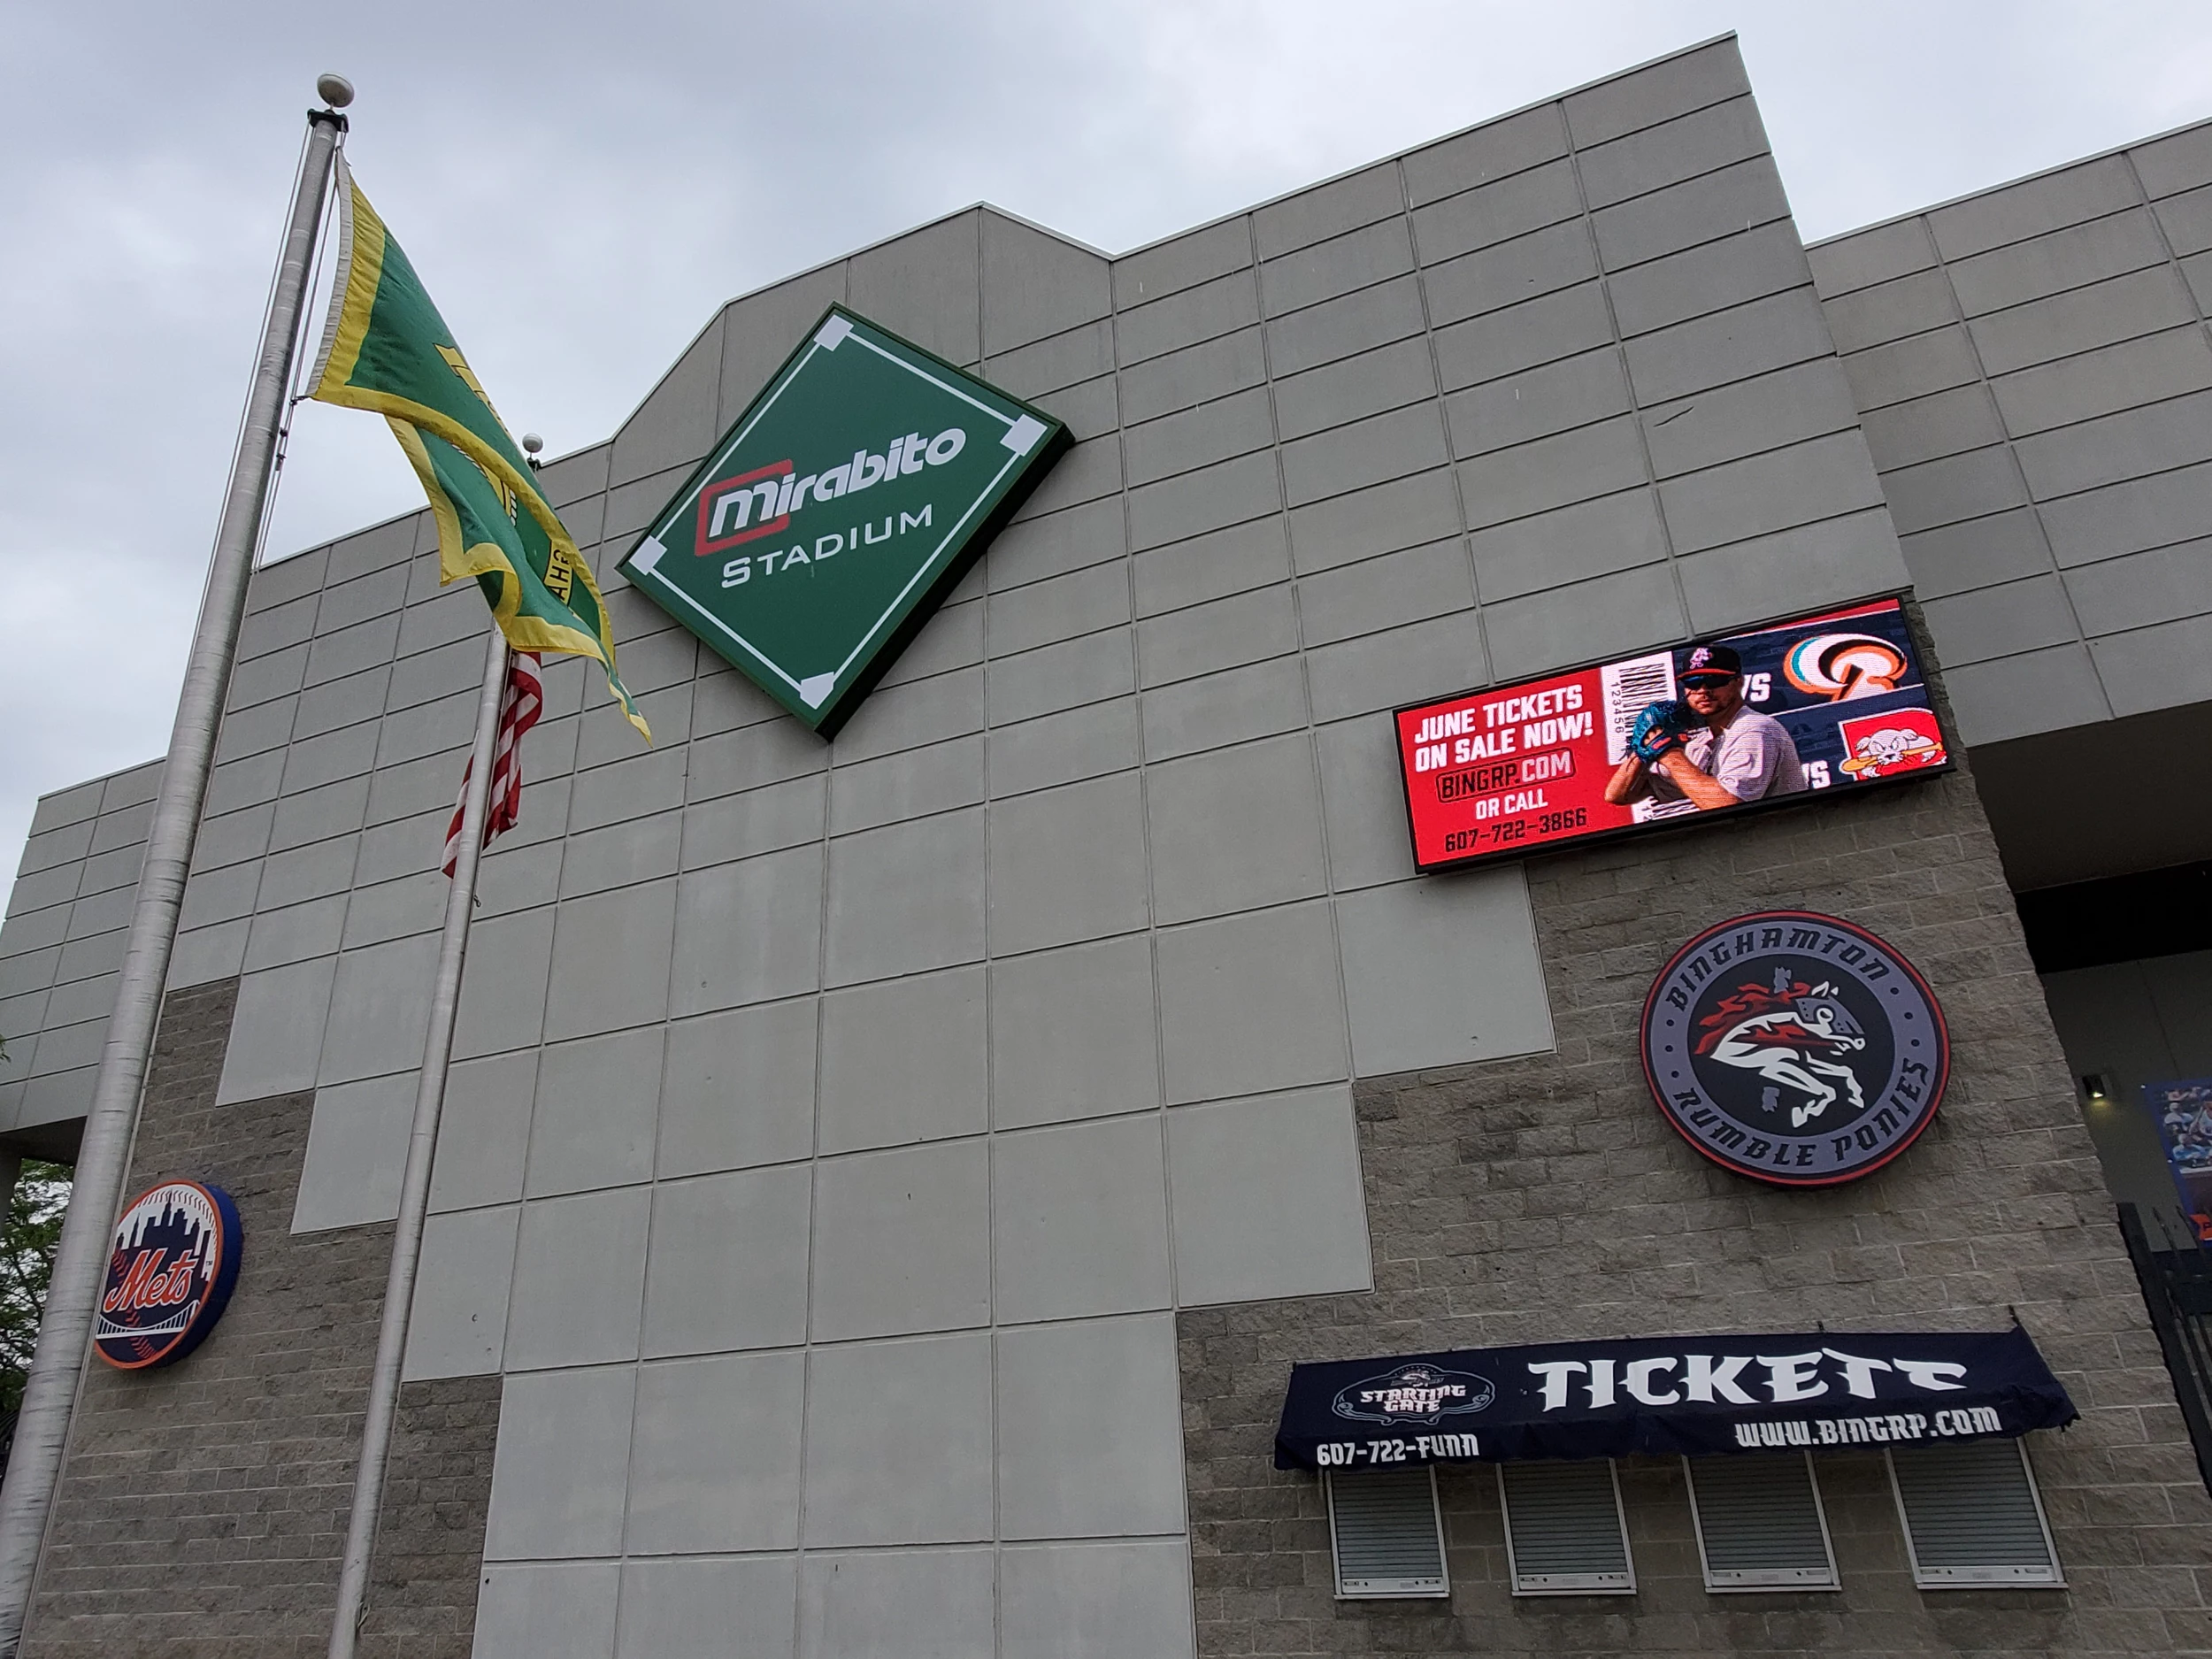  Mets:Binghamton Rumble Ponies Stadium Upgrades